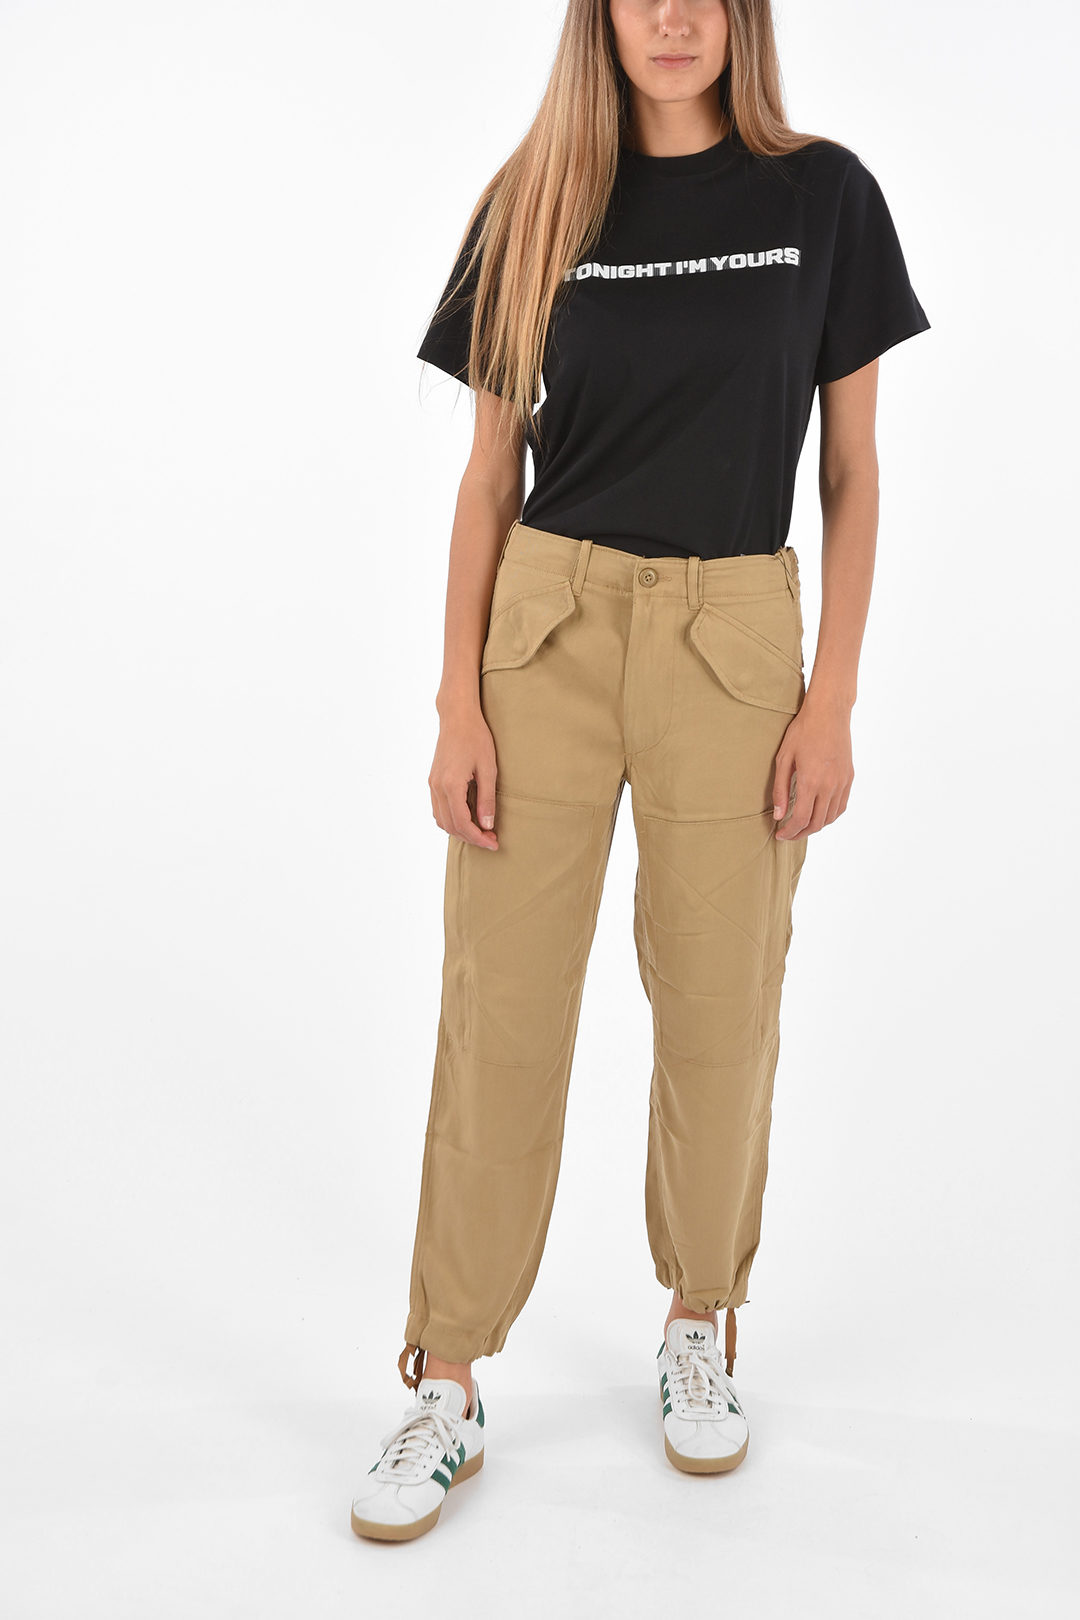 Lauren Ralph Lauren Women's Stretch Corduroy Mid-Rise Straight Pants (Tan,  18) at Amazon Women's Clothing store